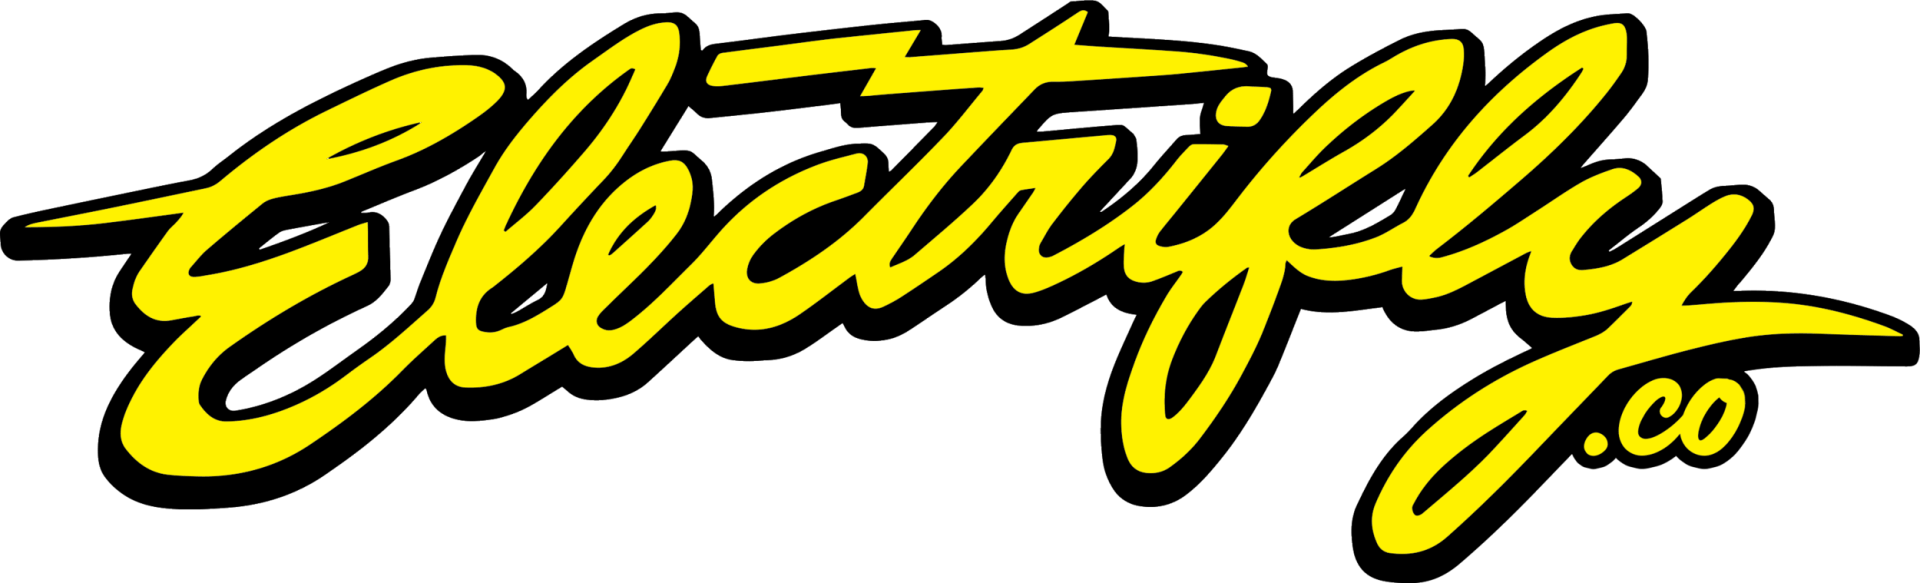 Electrifly Logo